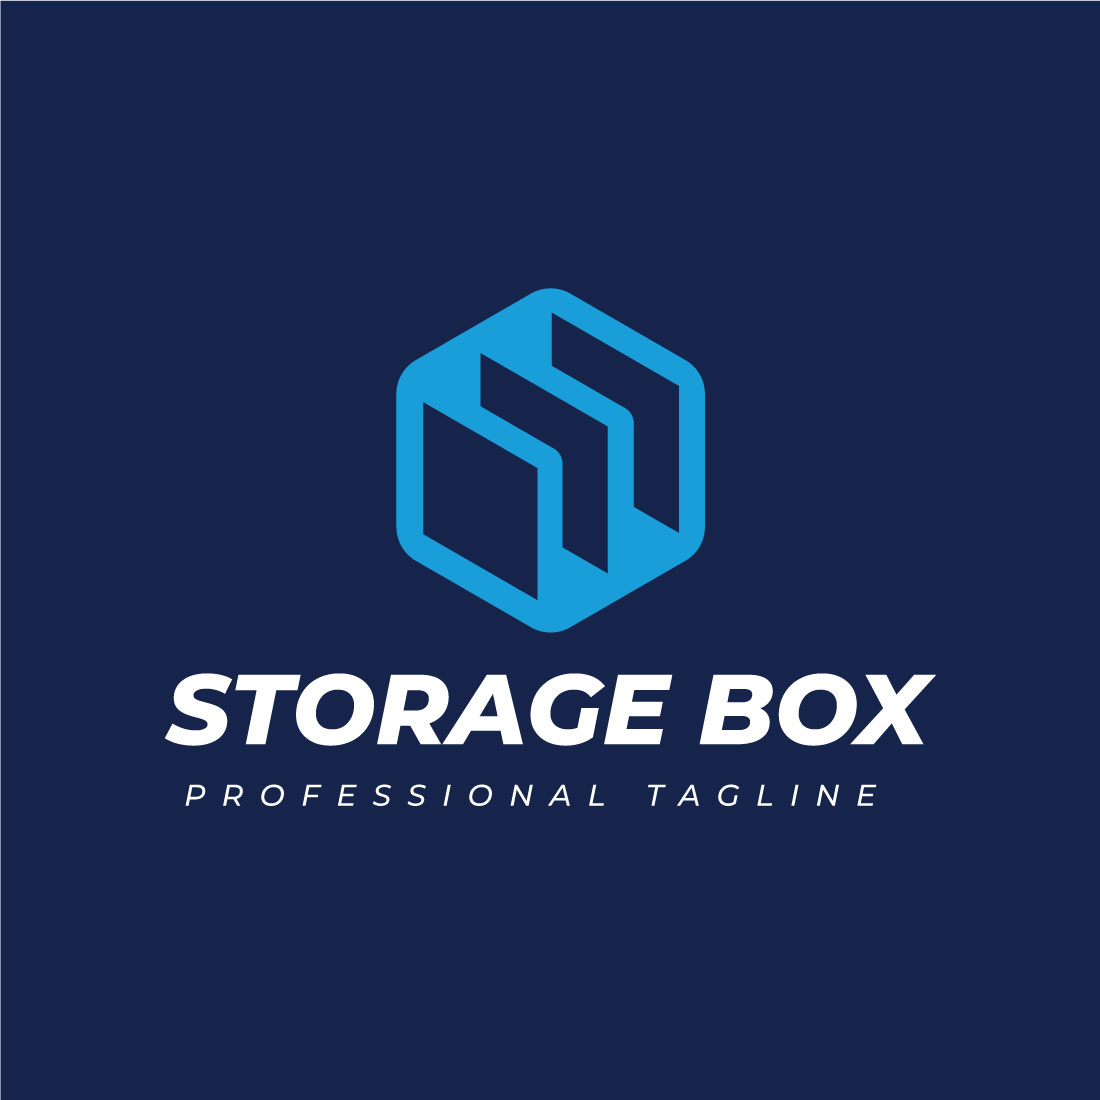 Storage Box Logo design template cover image.